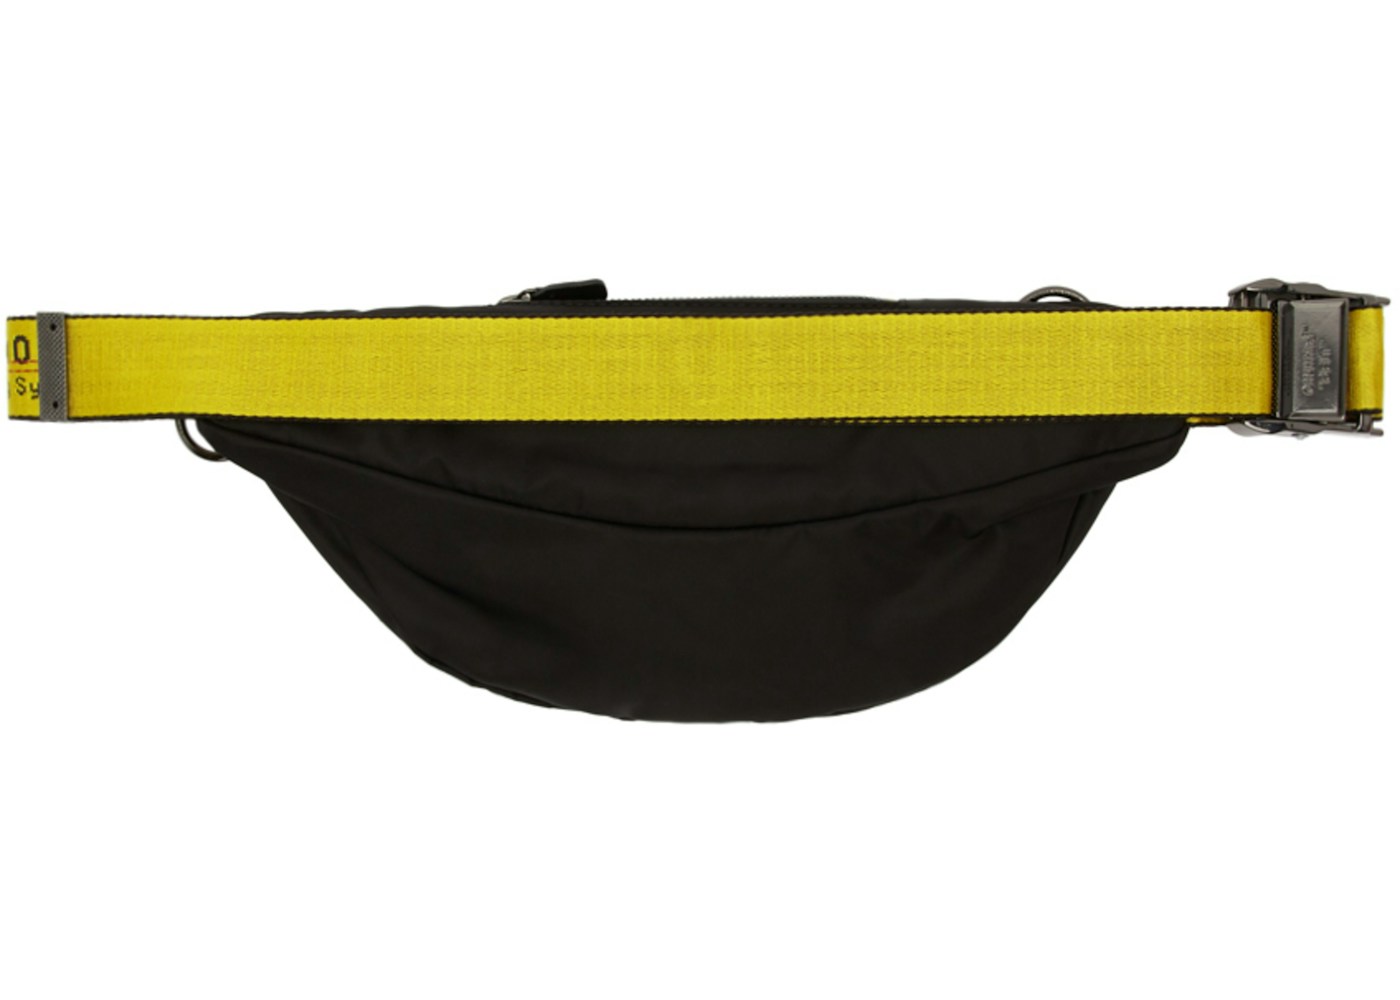 OFF-WHITE Basic Fannypack Black Yellow in Nylon with Gunmetal